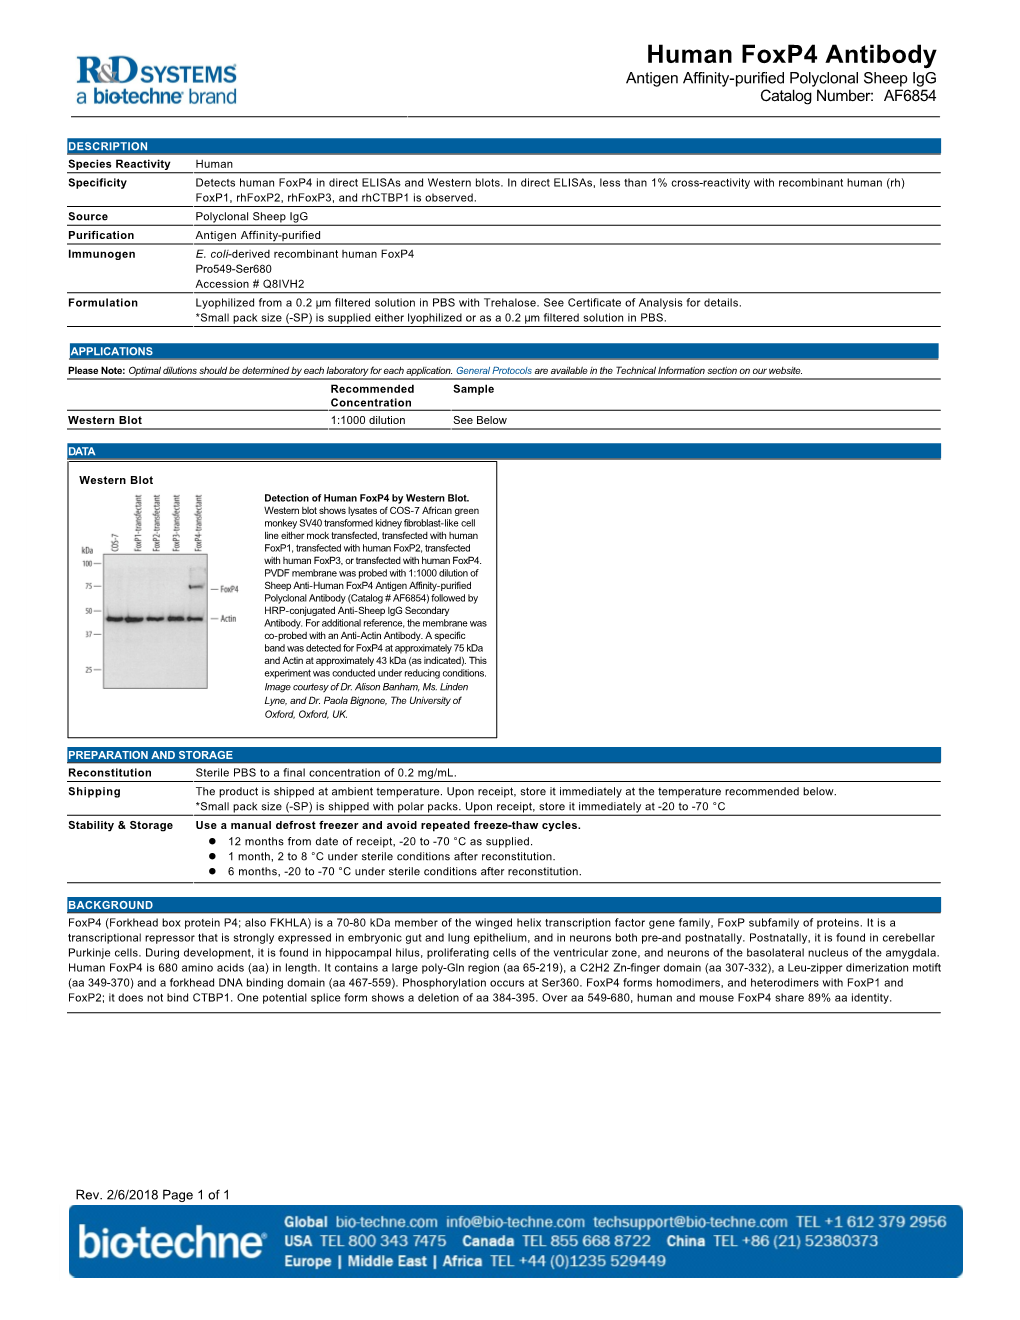 Human Foxp4 Antibody Antigen Affinity-Purified Polyclonal Sheep Igg Catalog Number: AF6854